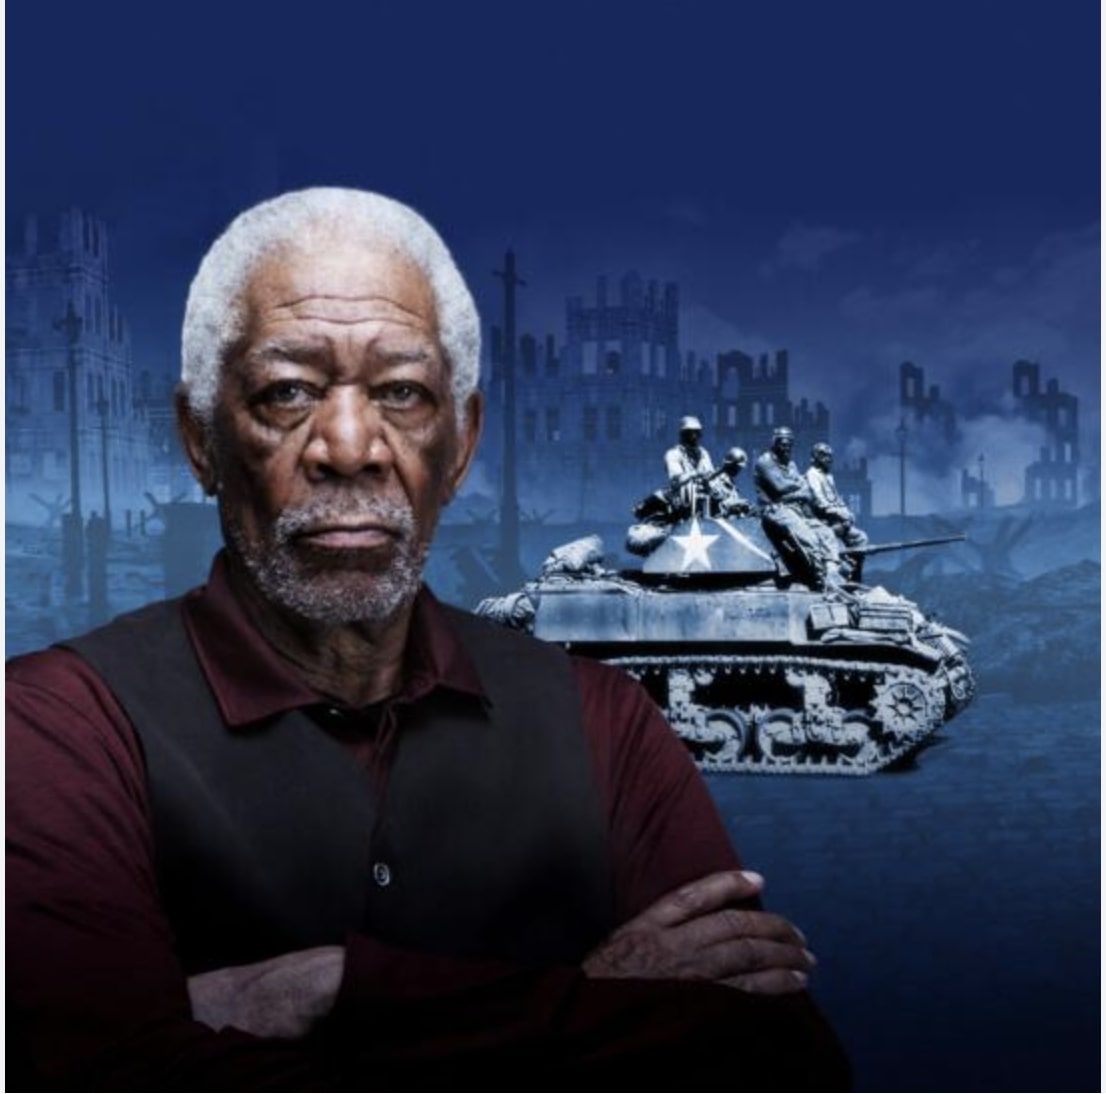 Morgan Freeman speaks about the impact of the 761st tank batallion.